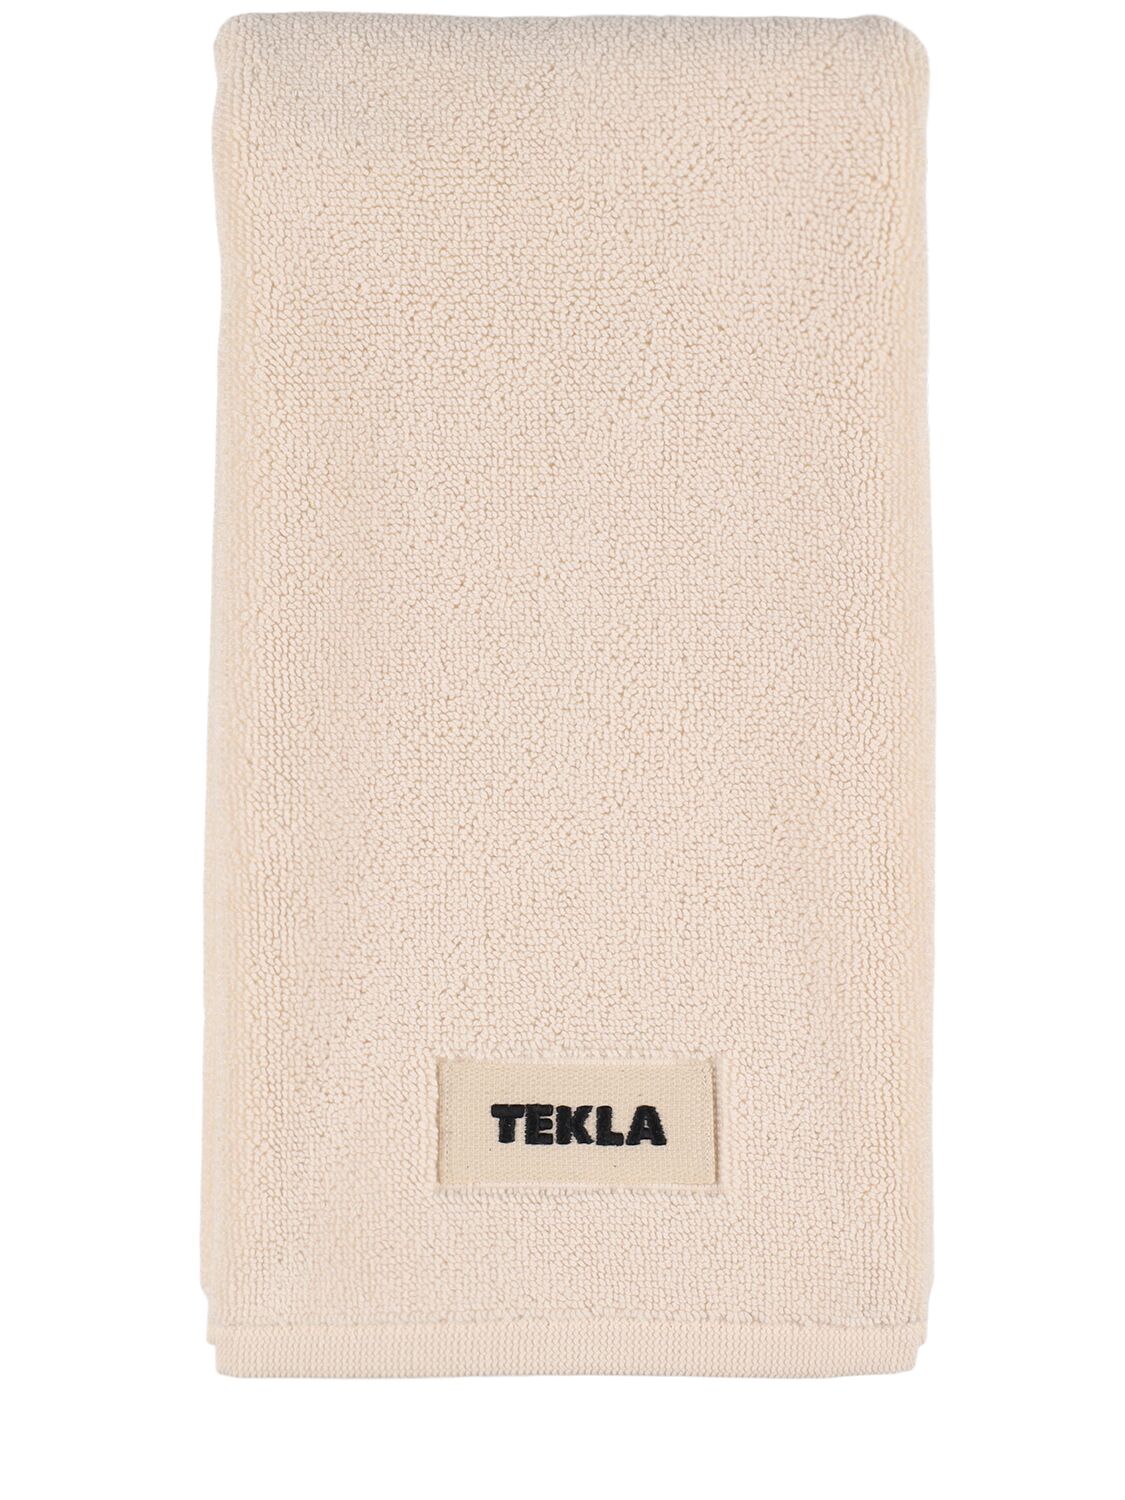 Tekla Ivory Bath Mat In White